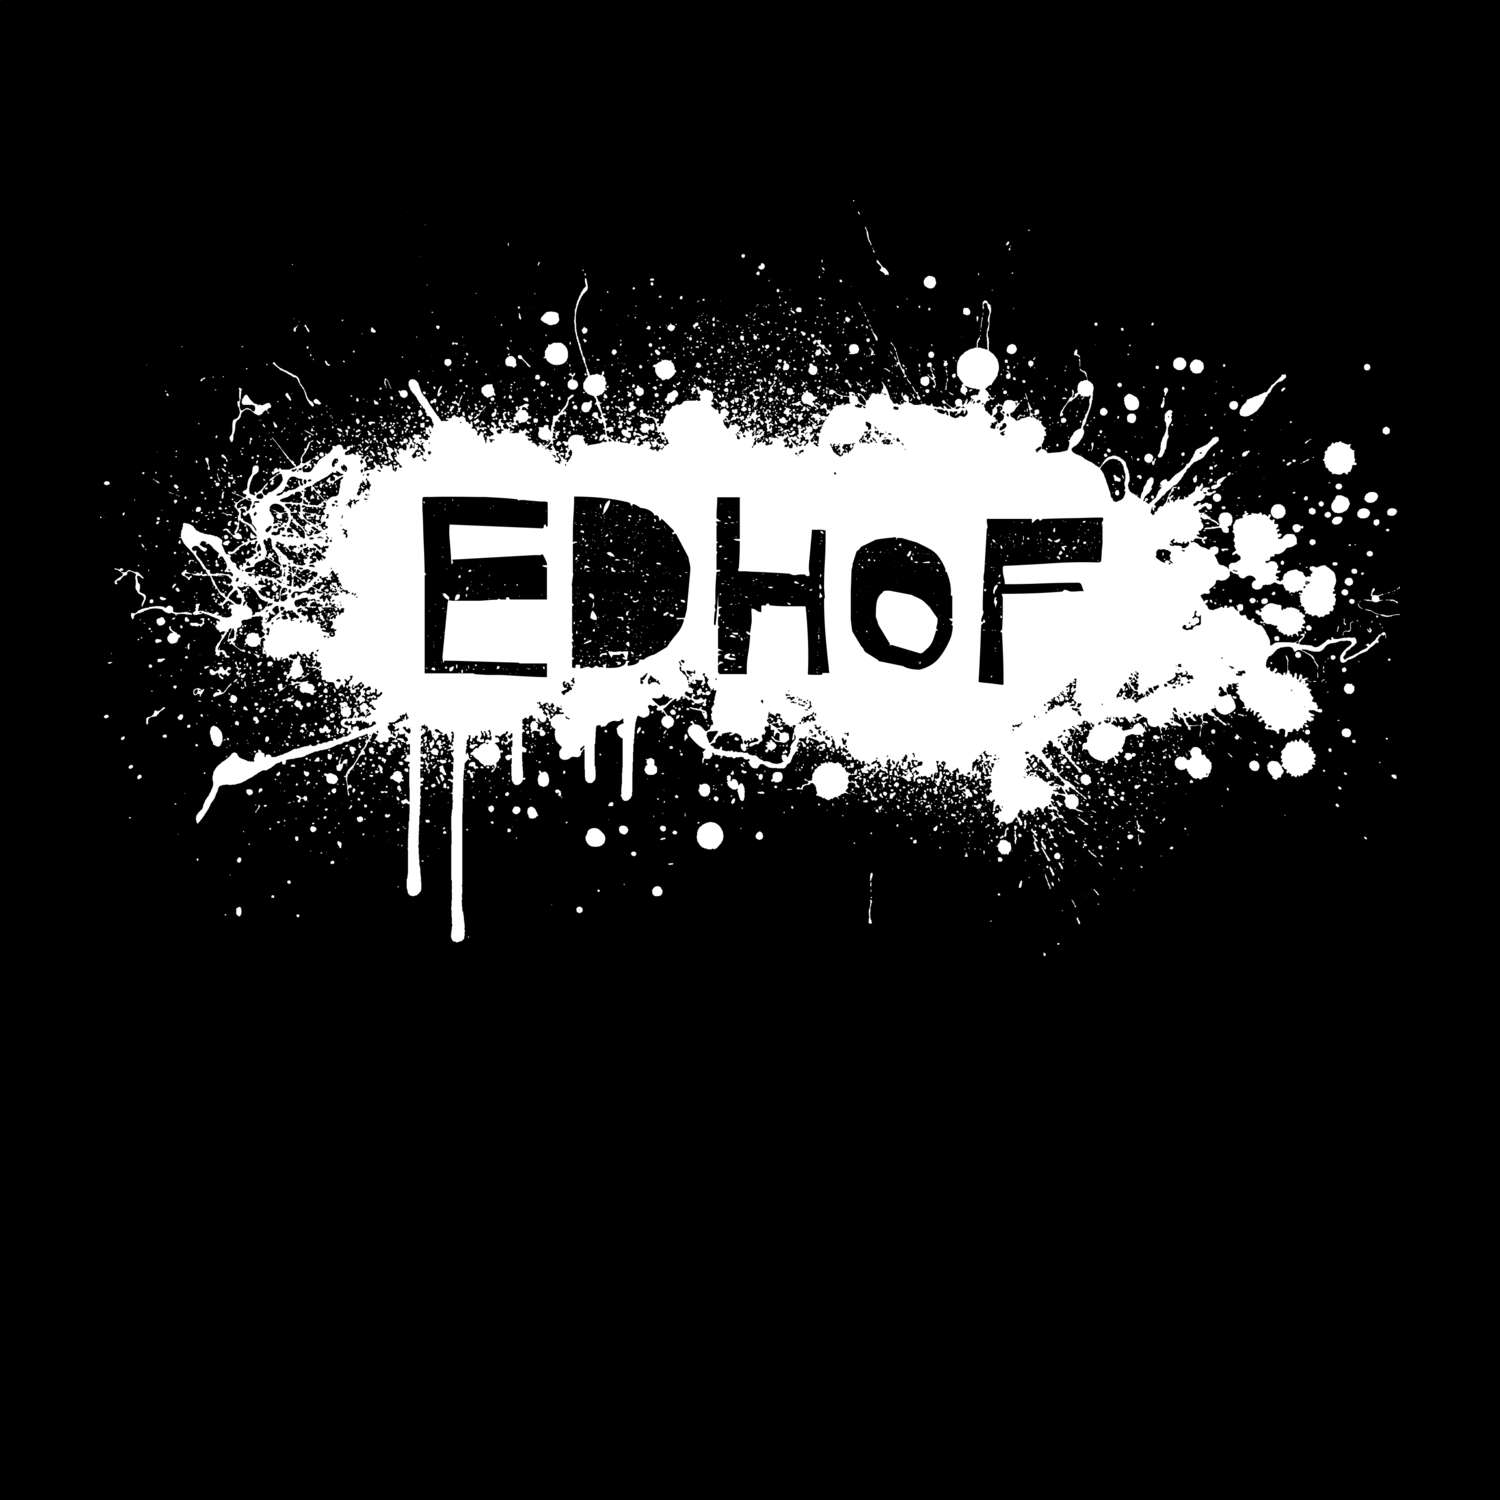 Edhof T-Shirt »Paint Splash Punk«